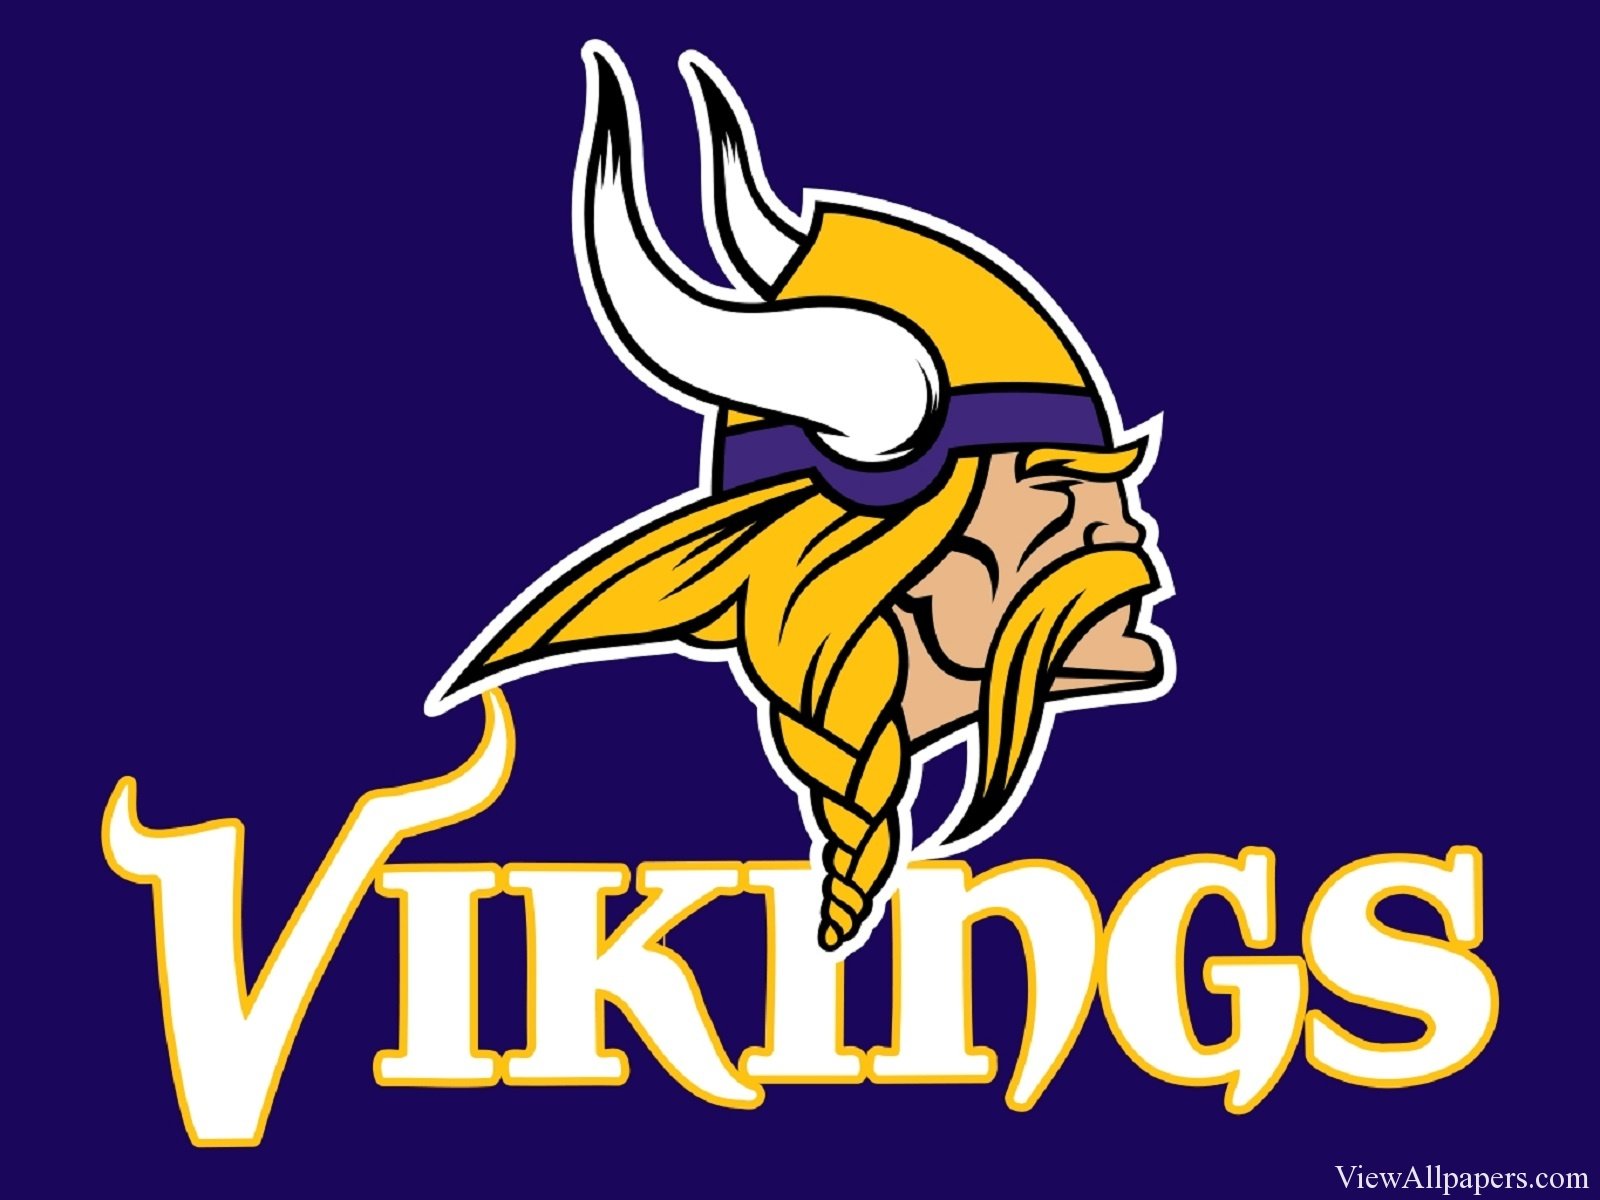 Vikings Logo HD Resolution Wallpaper Free download Minnesota Vikings